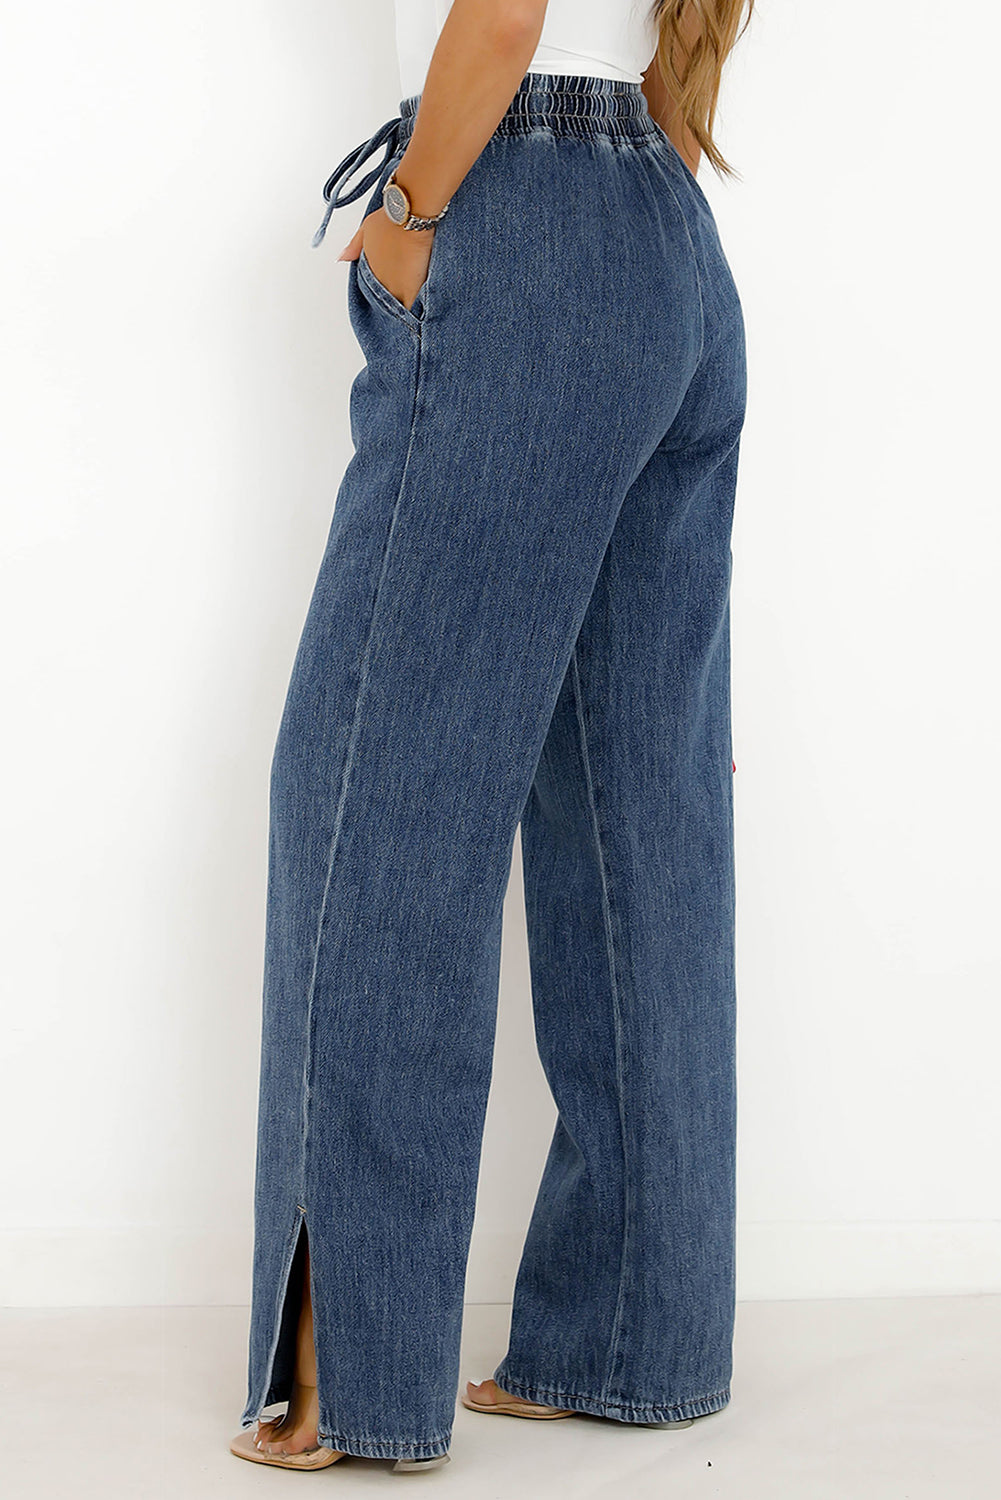 Vintage Elastic Waist Wide Leg Jeans Loose Denim